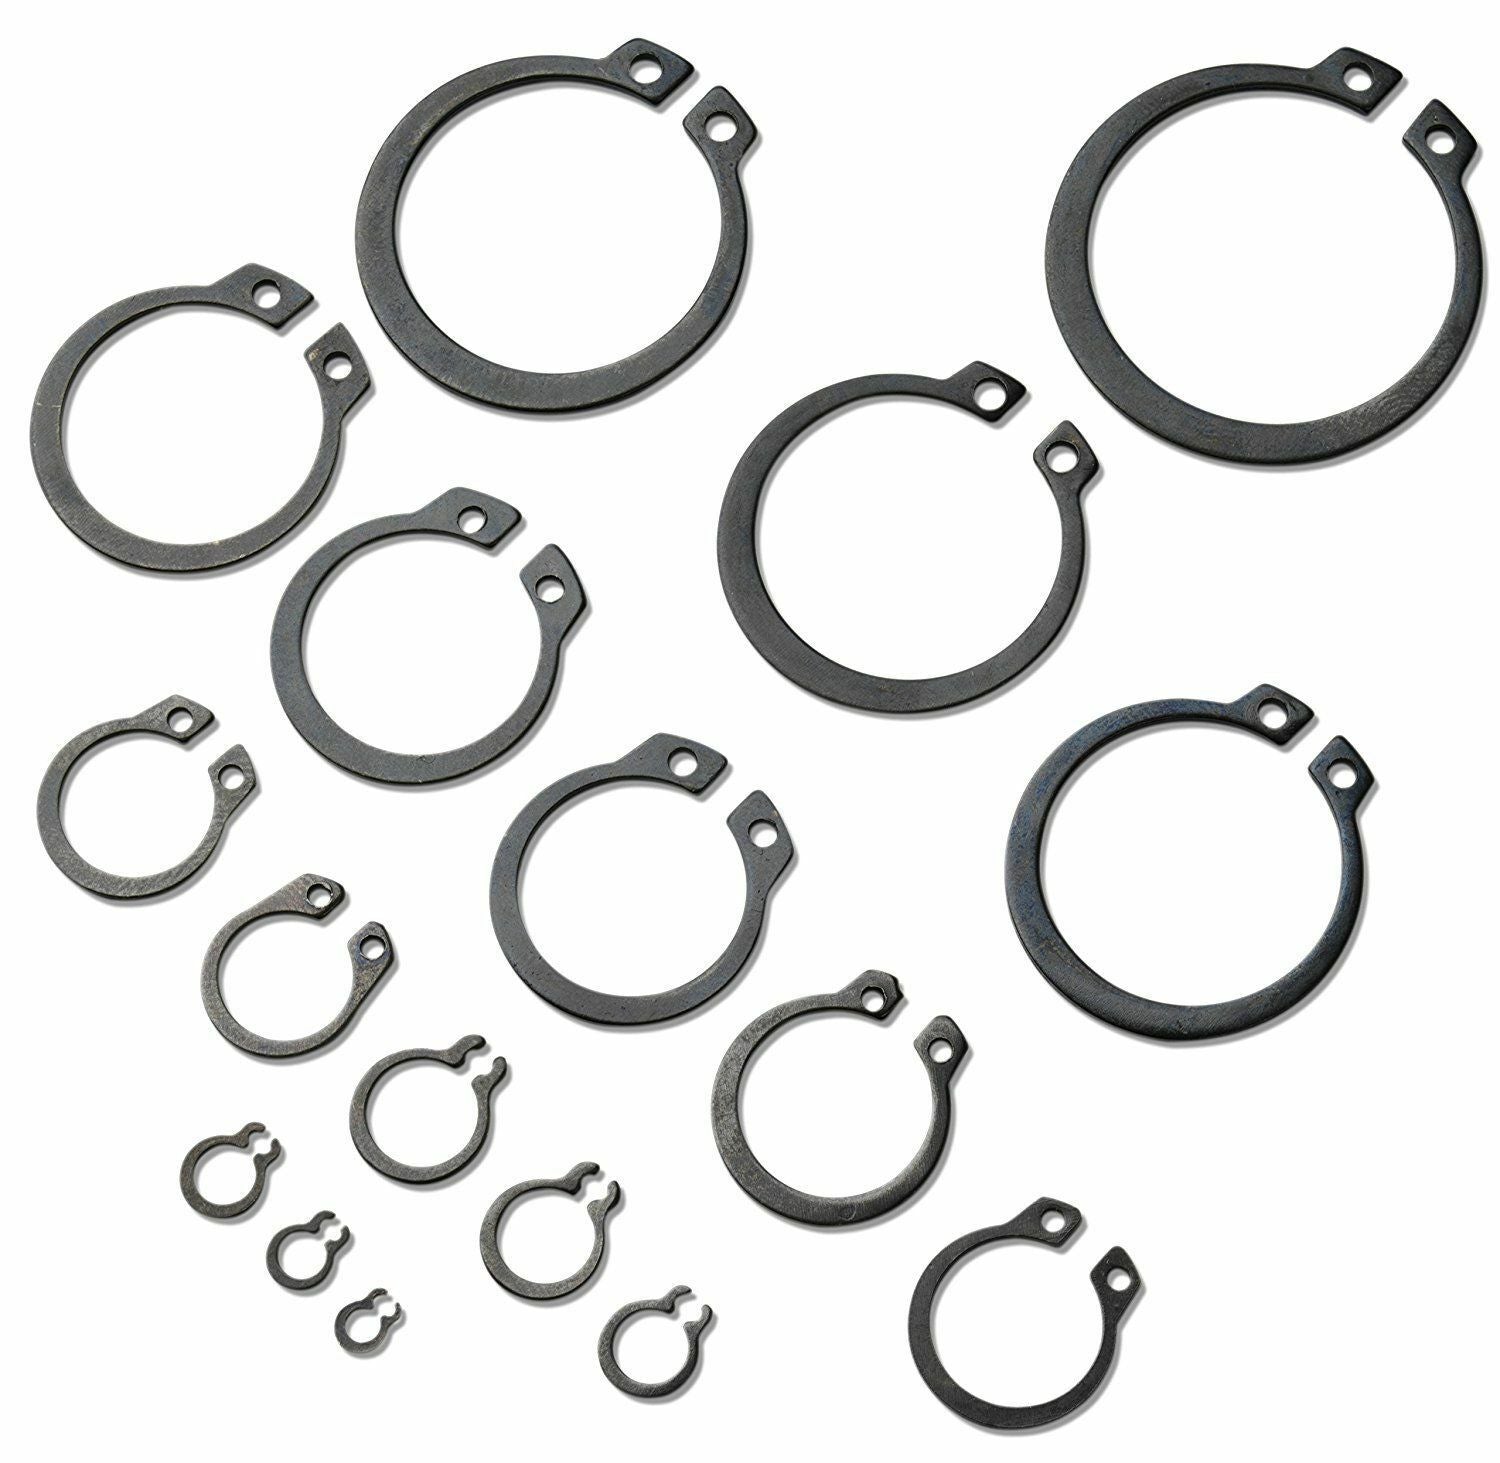 300pc Snap Retaining Ring Assortment Kit 18 Different Sizes 1/8"-1 1/4"